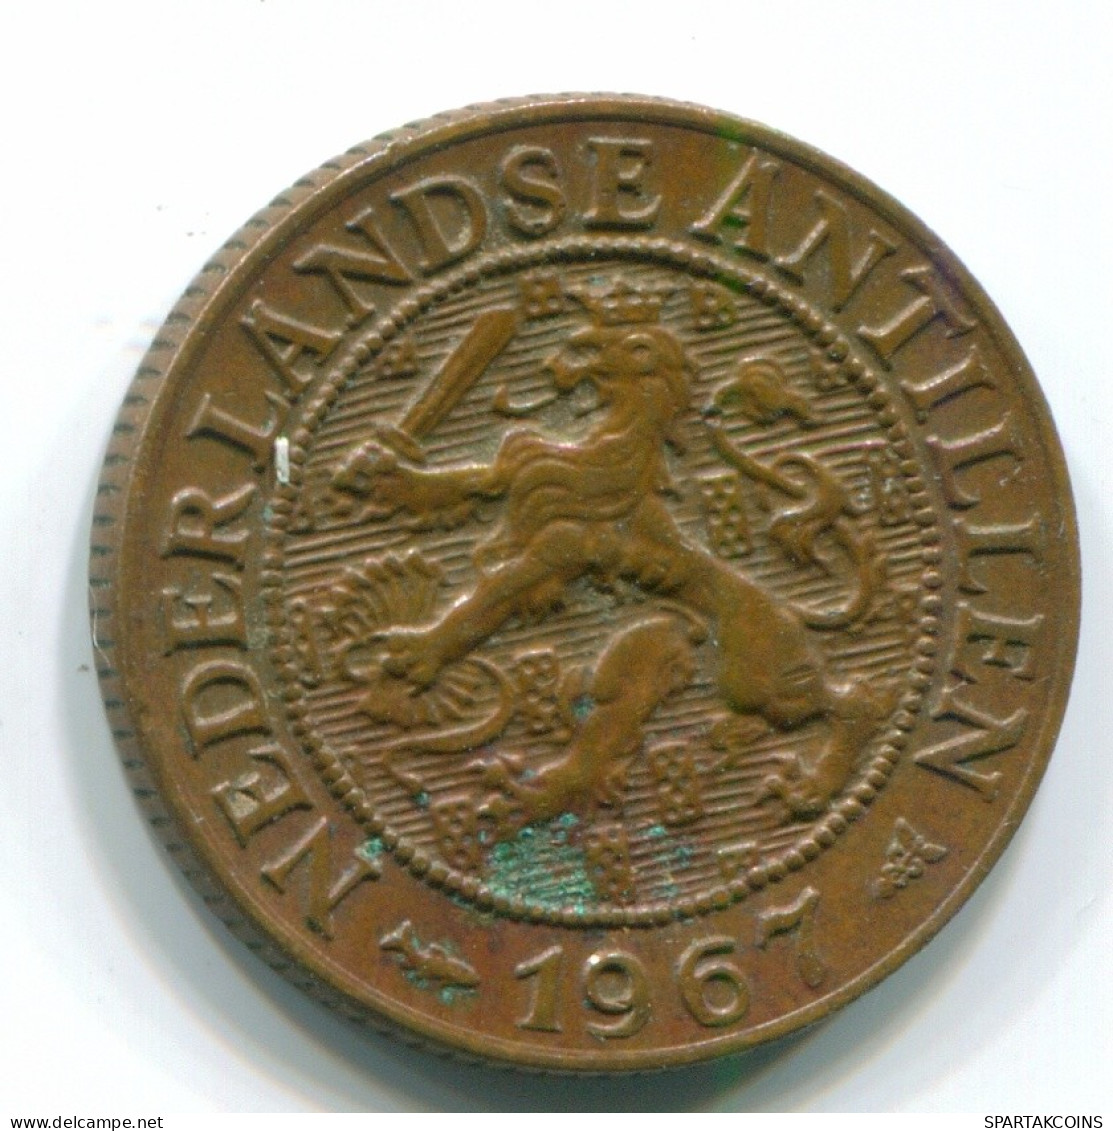 1 CENT 1967 NETHERLANDS ANTILLES Bronze Fish Colonial Coin #S11138.U.A - Niederländische Antillen